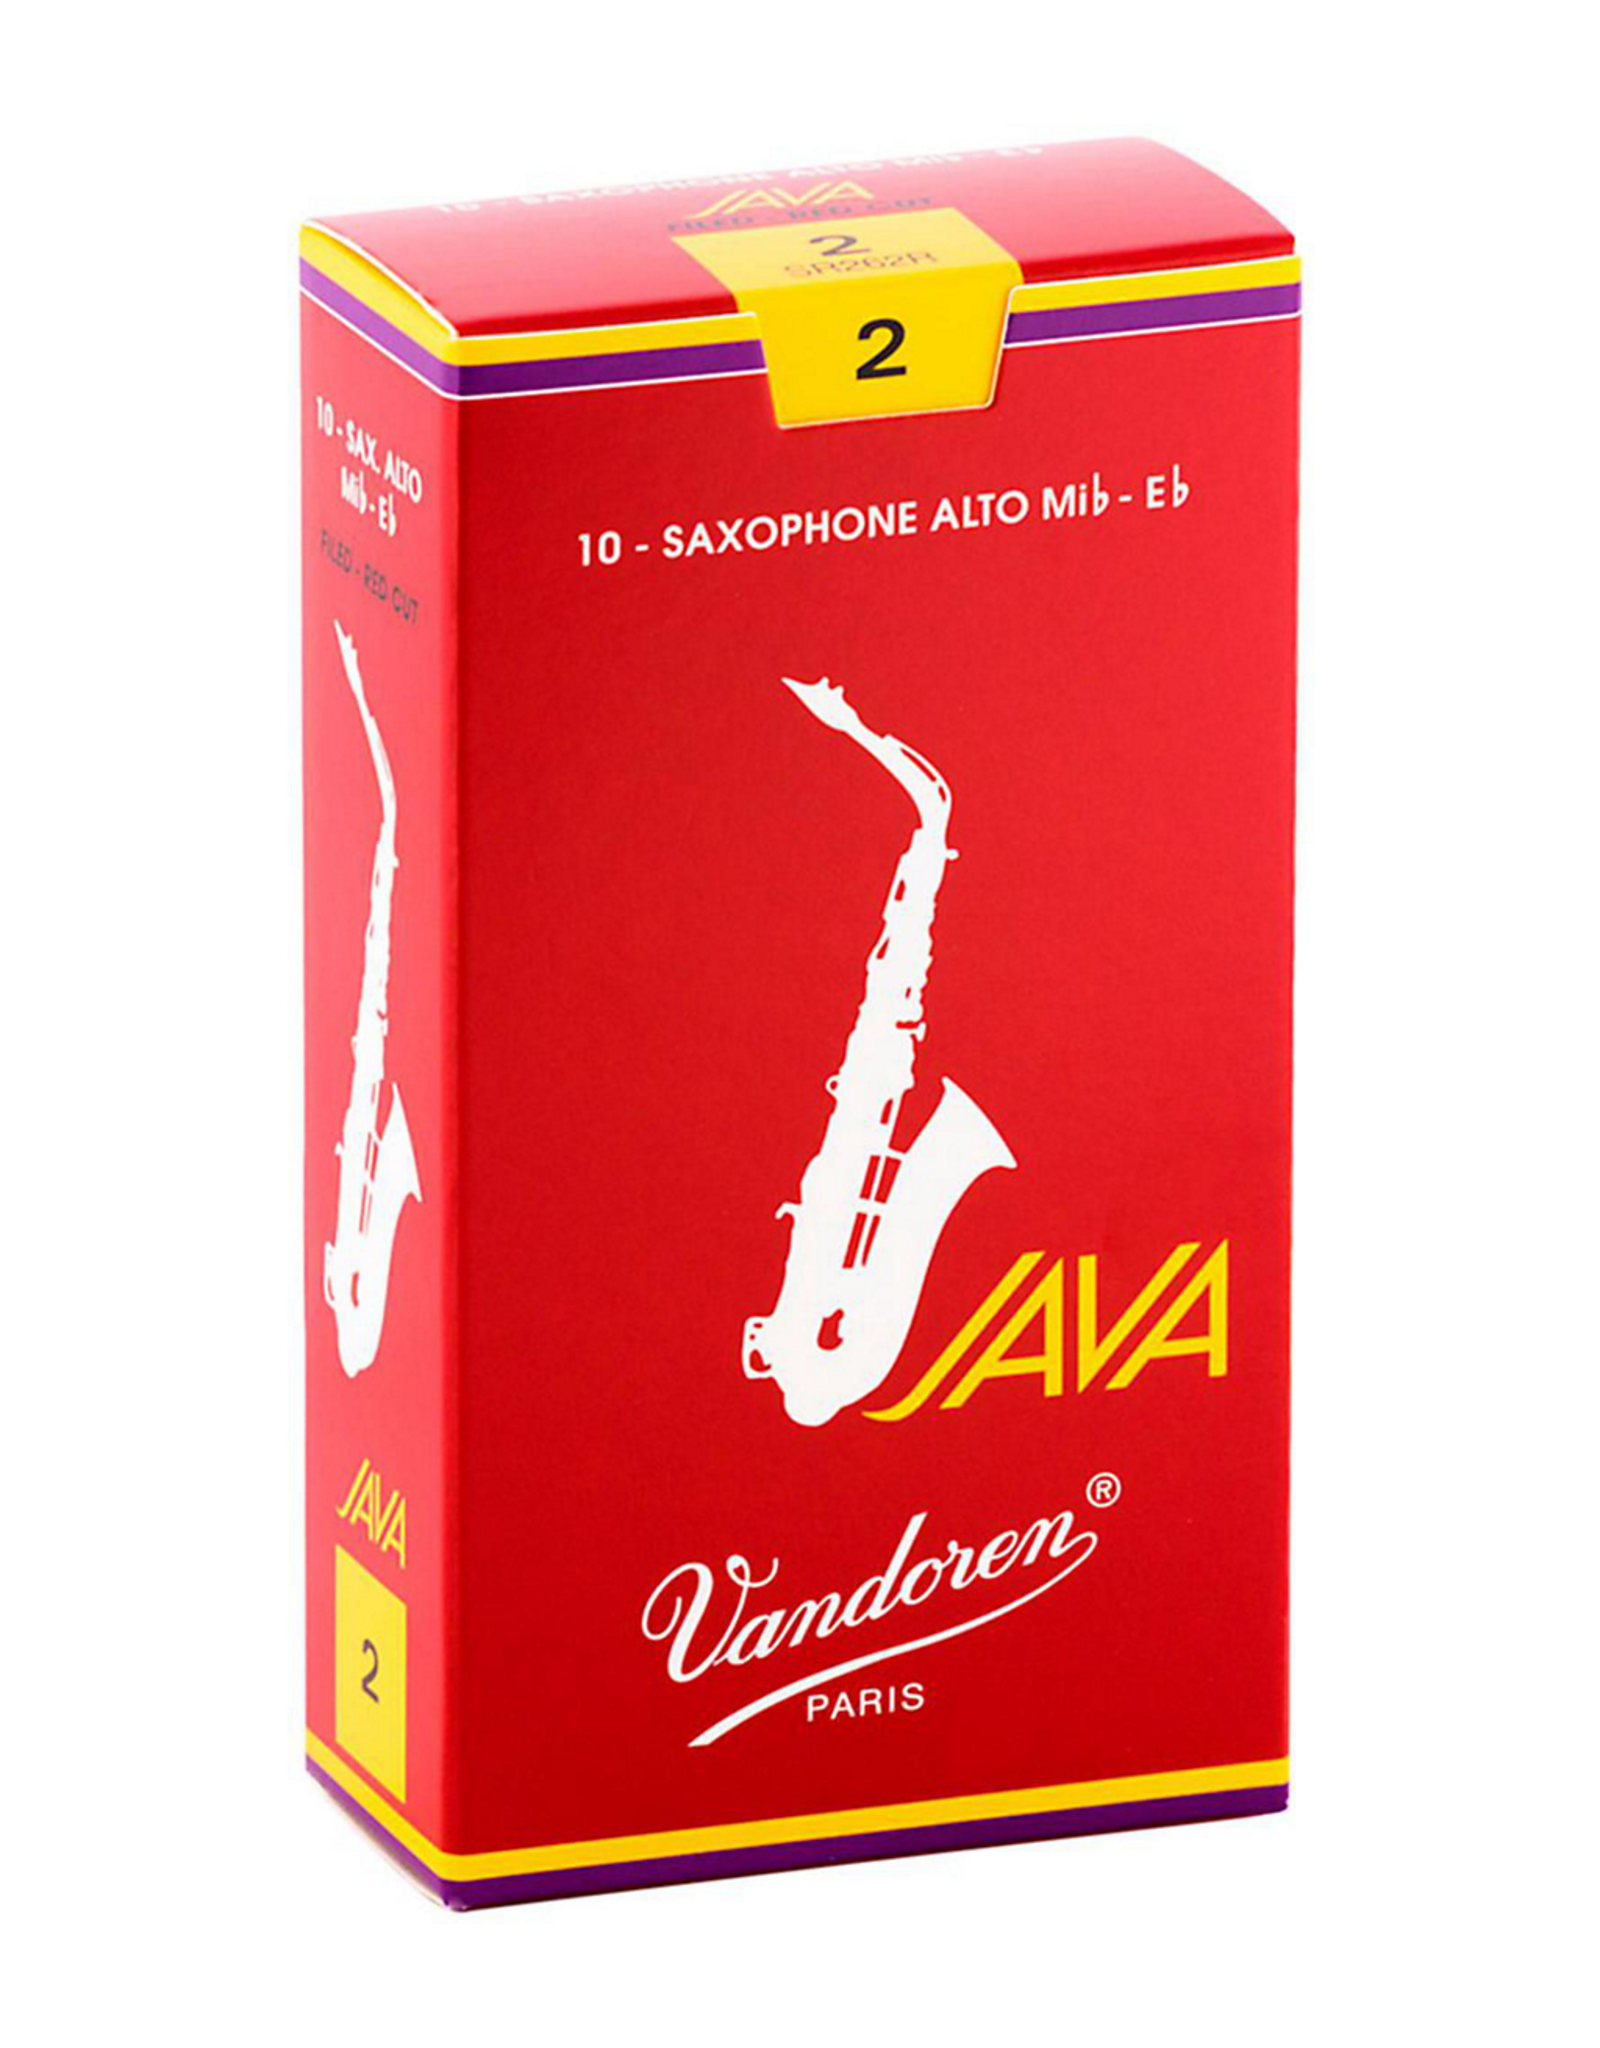 Vandoren Vandoren Alto Sax Java Red Cut Reed Box of 10;